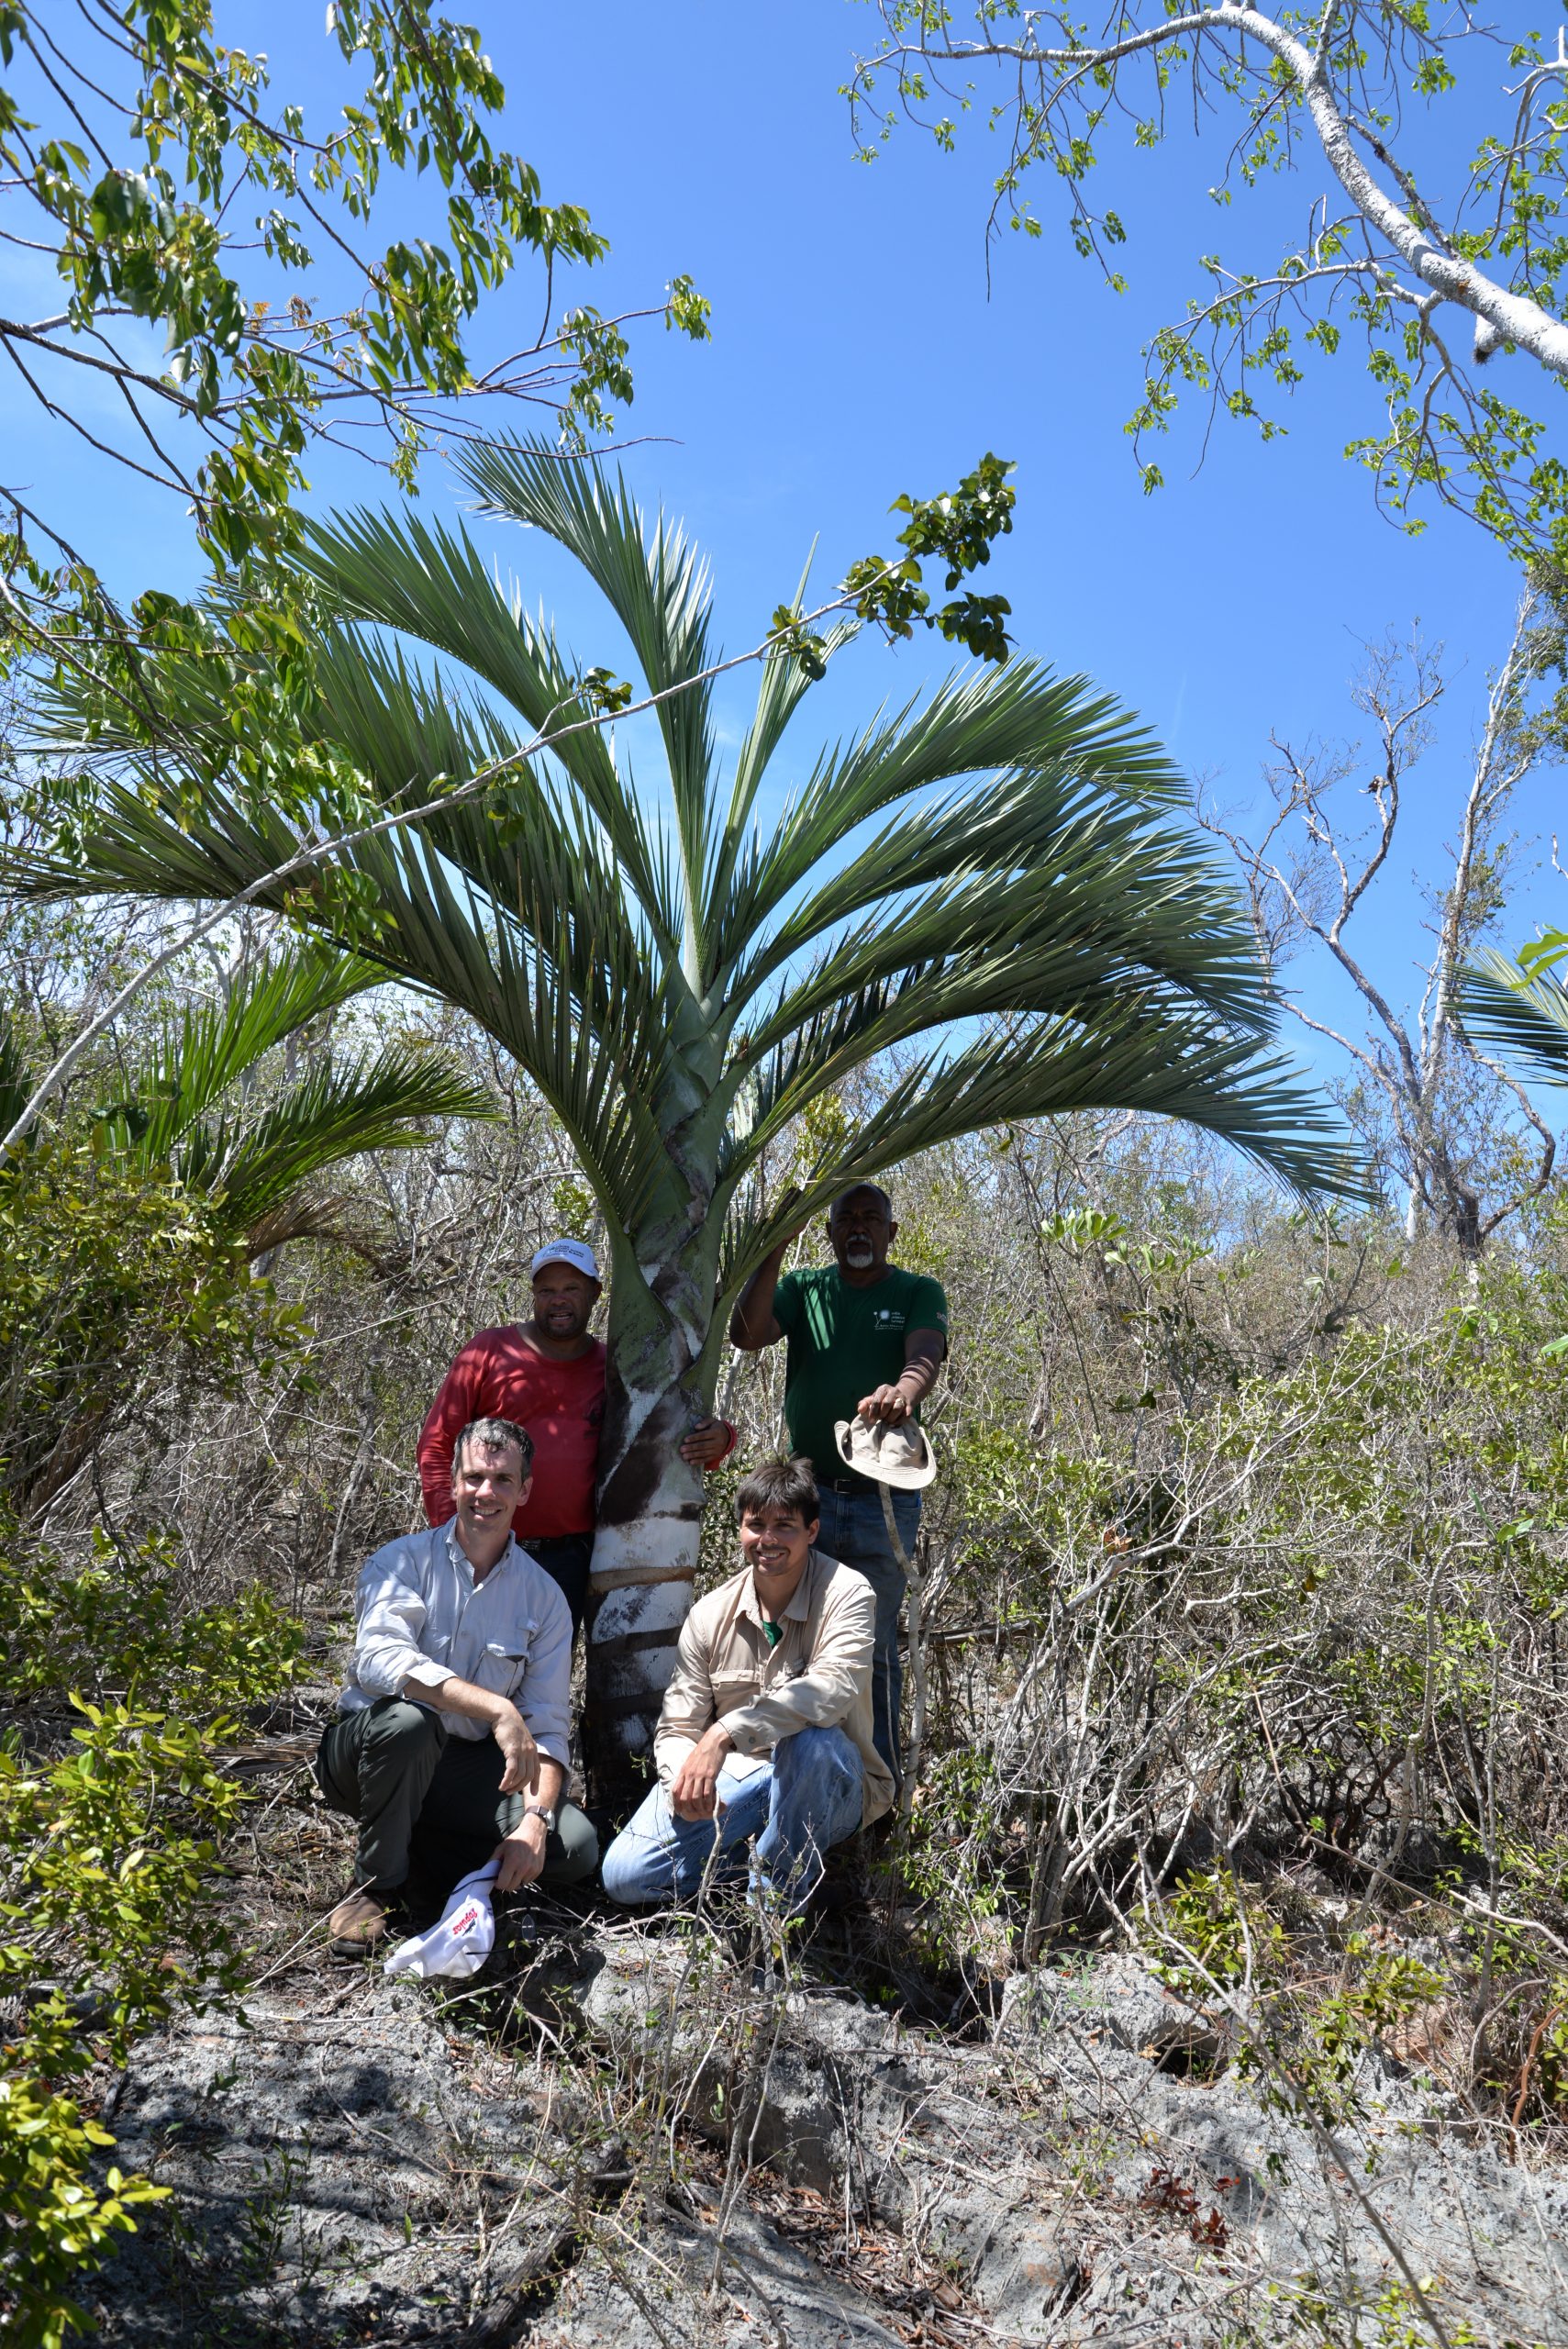 Pedro Toribio, Teodoro Clase, Patrick Griffith, and Xavier Gratacos with cacheito (Pseudophoenix ekmanii) in the Dominican Republic.